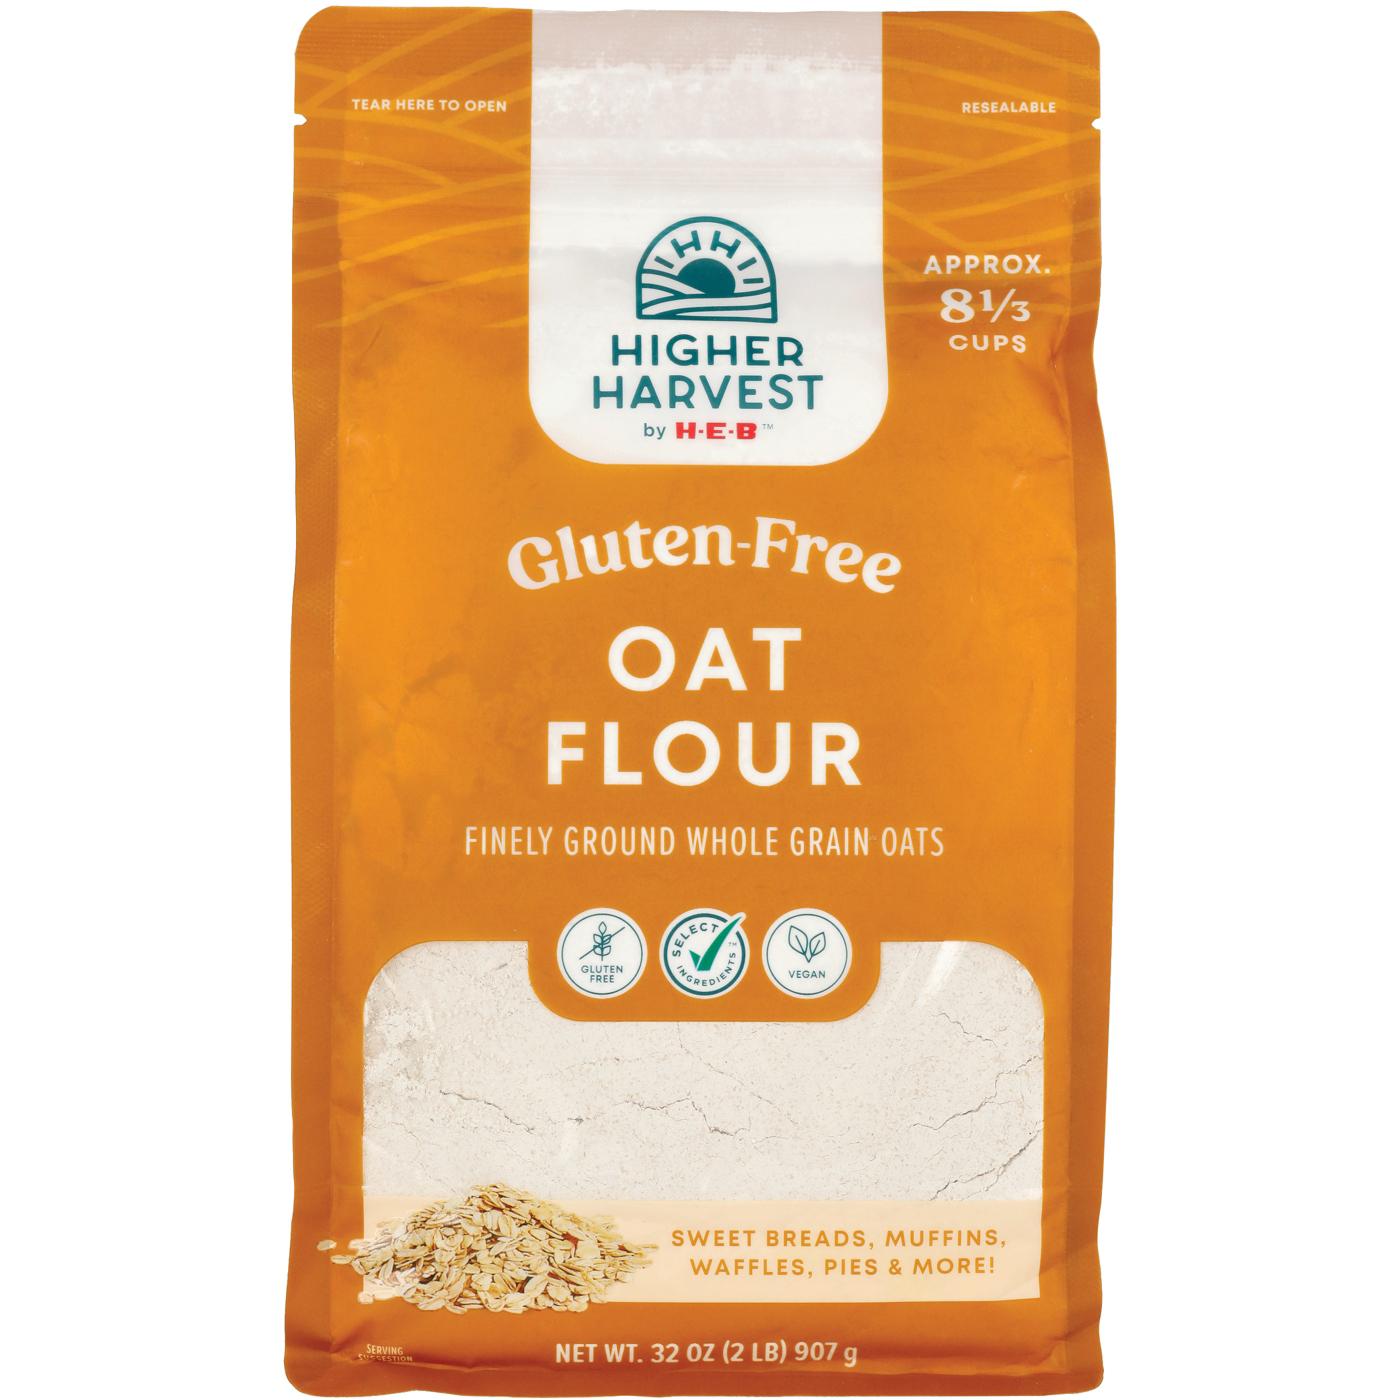 Higher Harvest by H-E-B Gluten-Free Oat Flour; image 1 of 2